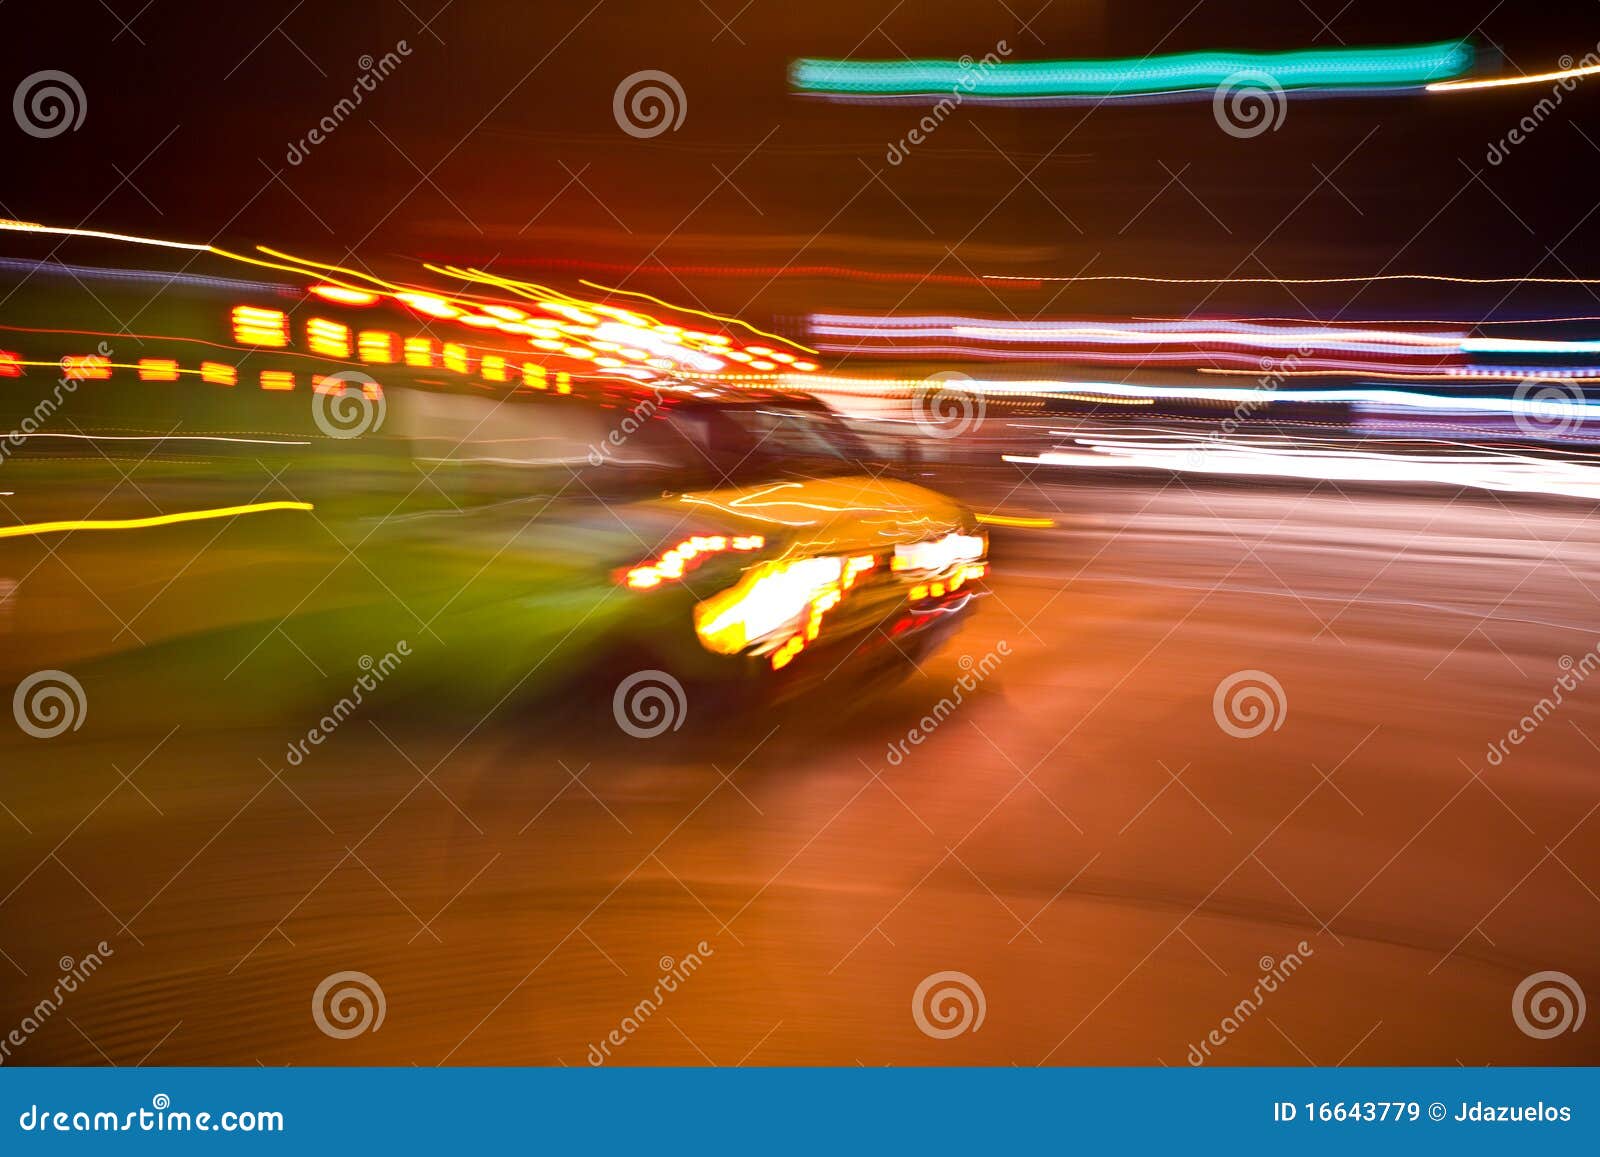 blurry american ambulance in a rush